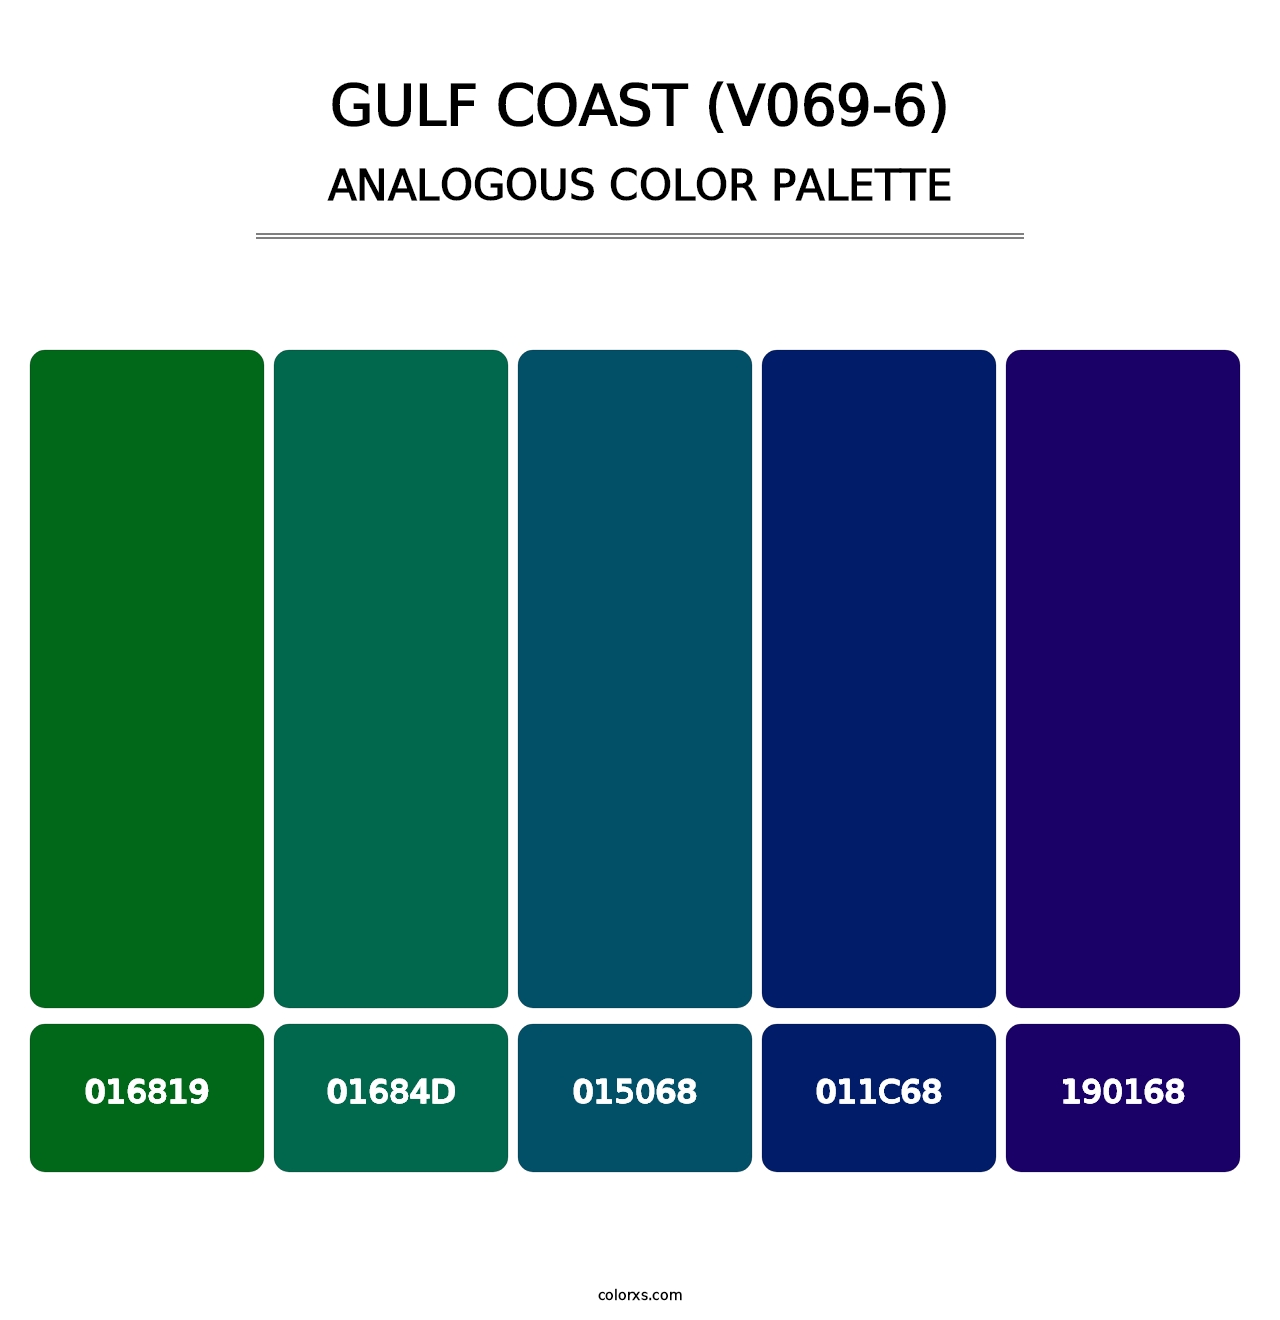 Gulf Coast (V069-6) - Analogous Color Palette